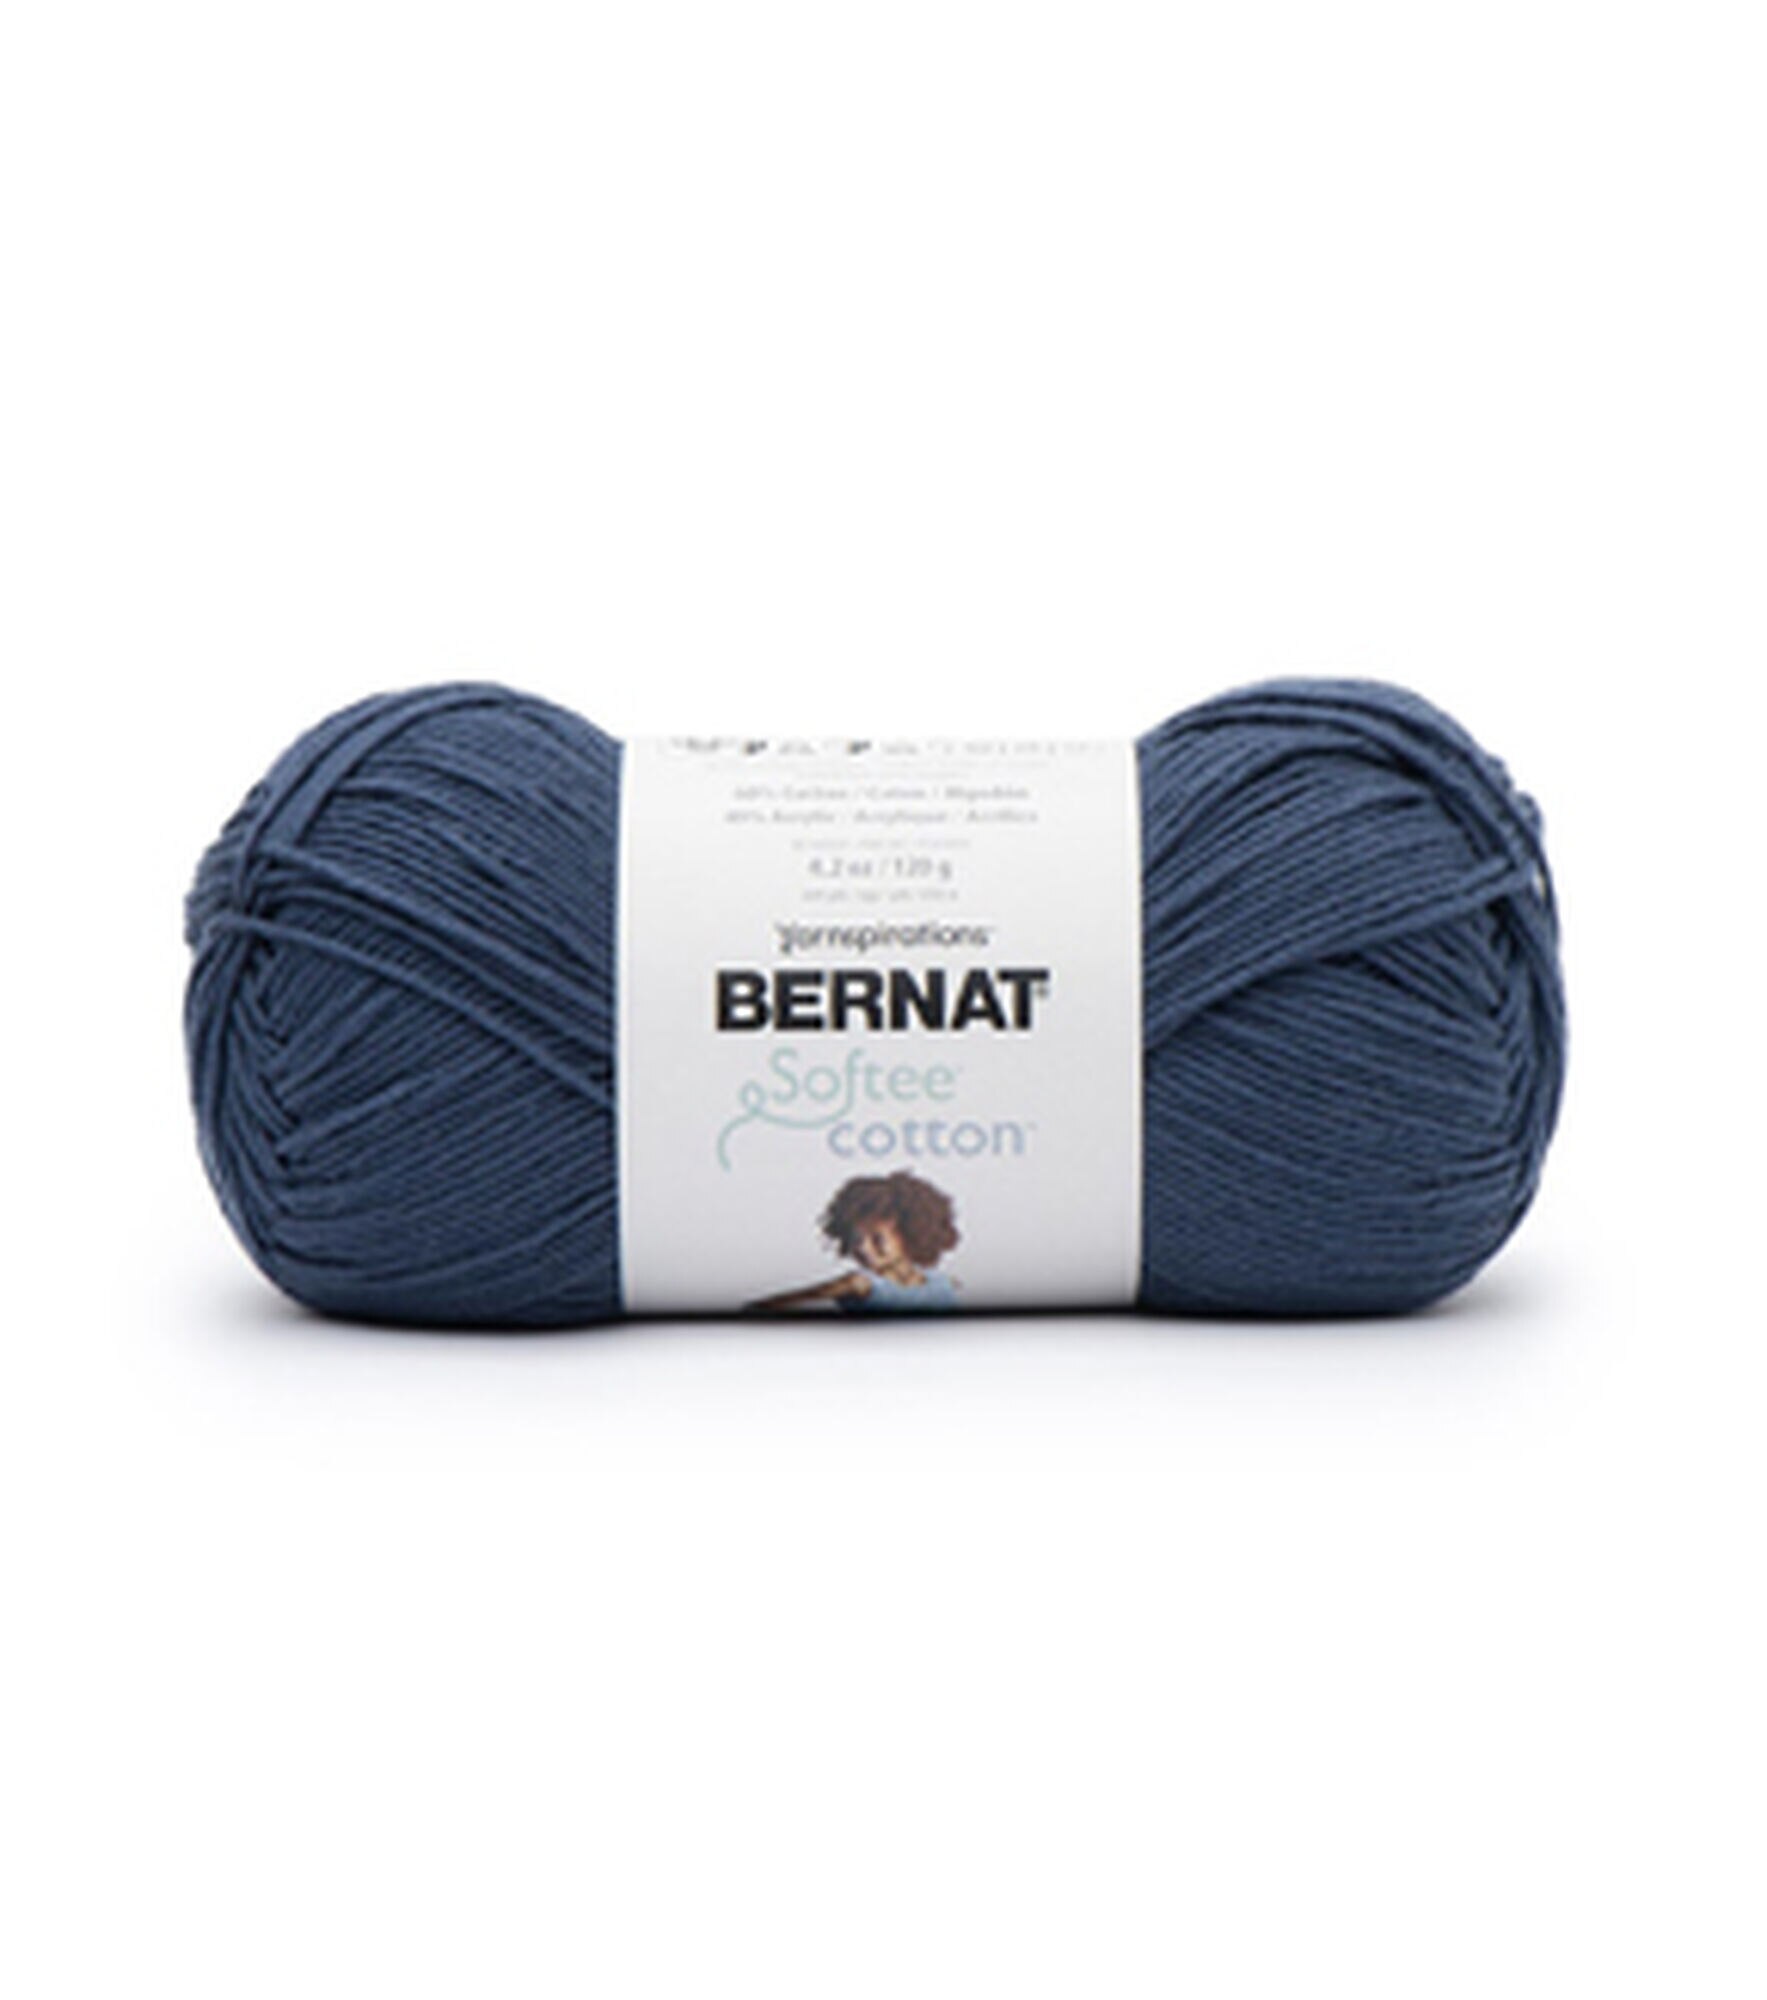 Bernat Softee 254yds Light Weight Cotton Yarn, Seaside Blue, hi-res